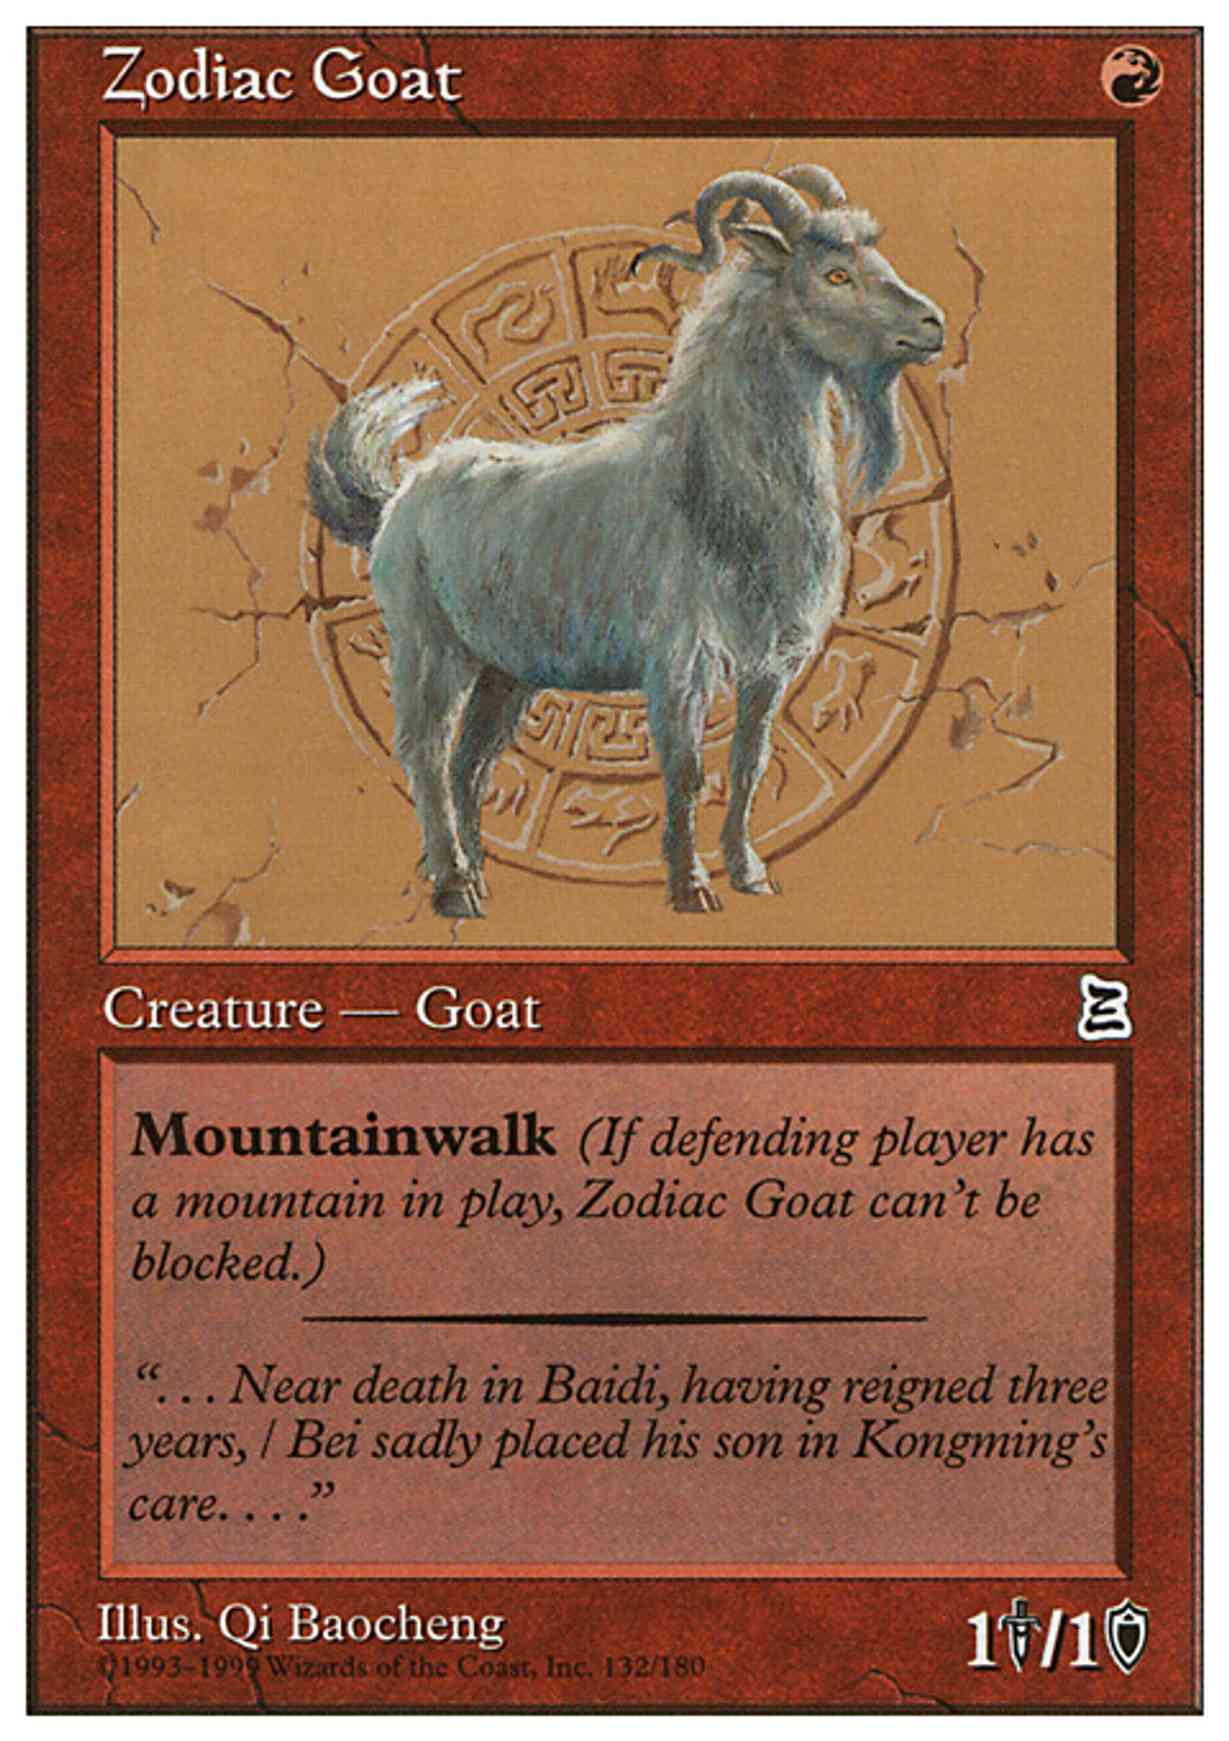 Zodiac Goat magic card front